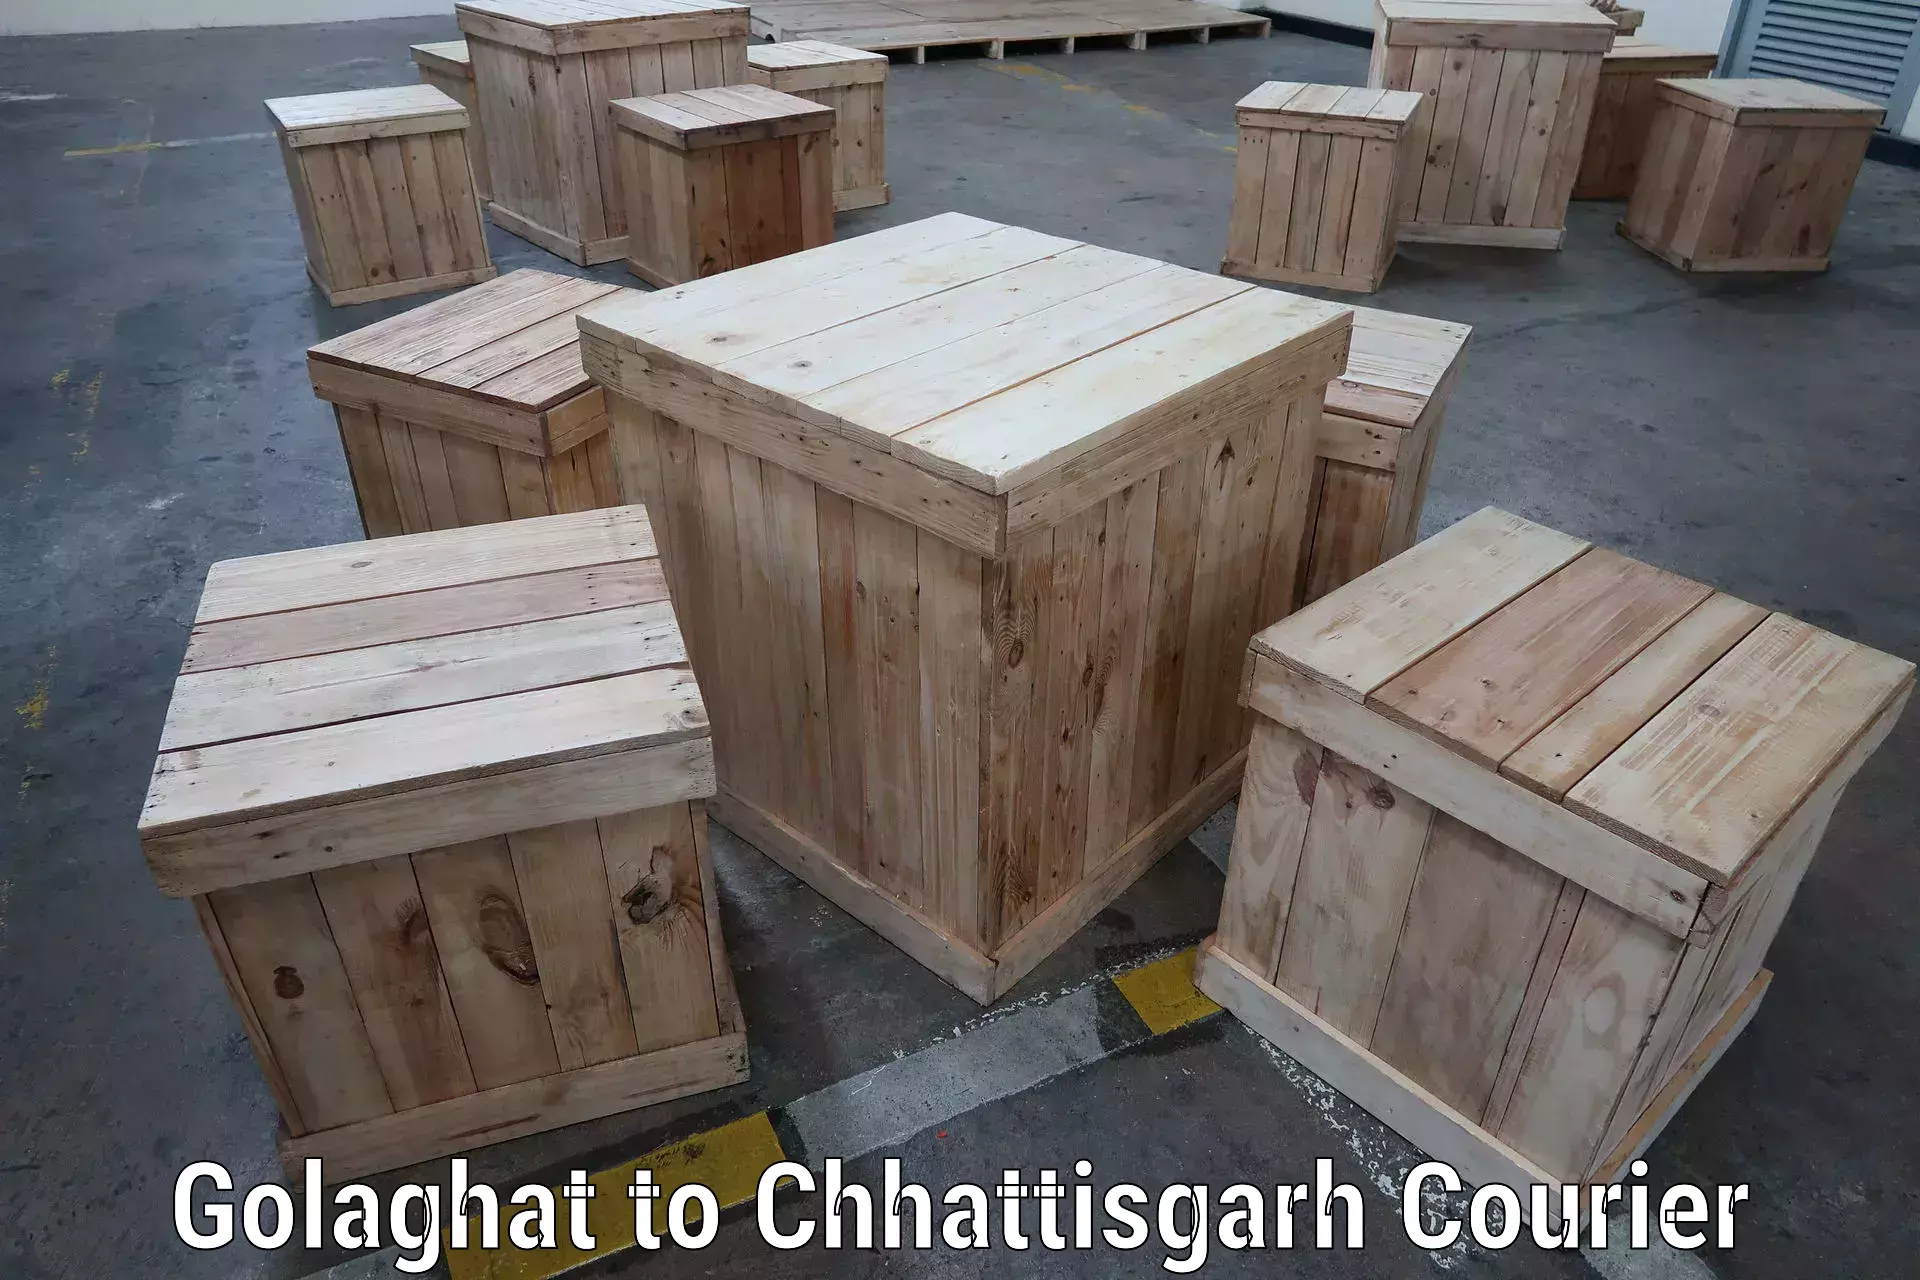 Logistics management Golaghat to Dhamtari